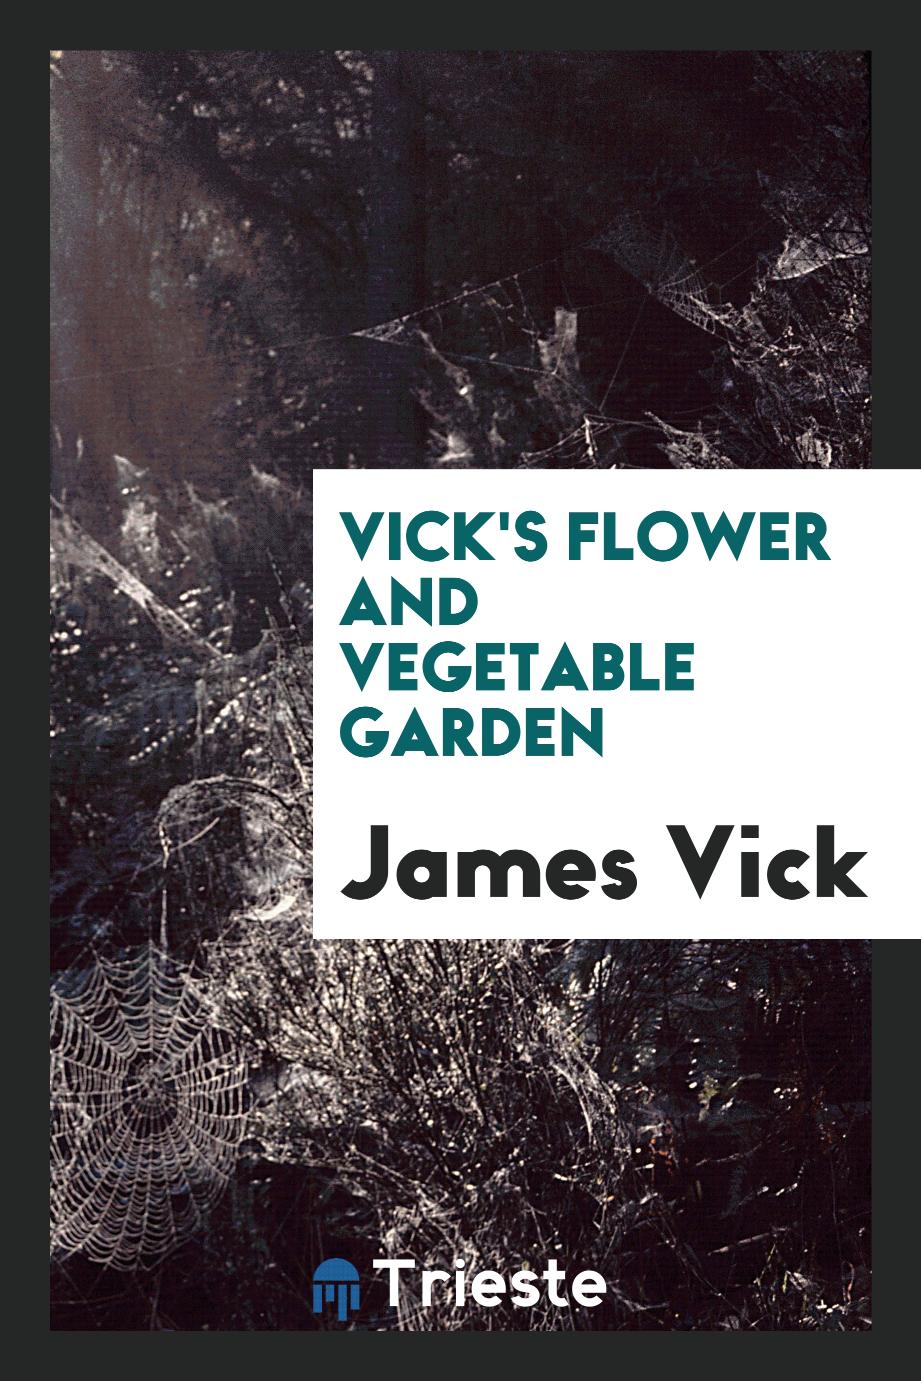 Vick's flower and vegetable garden